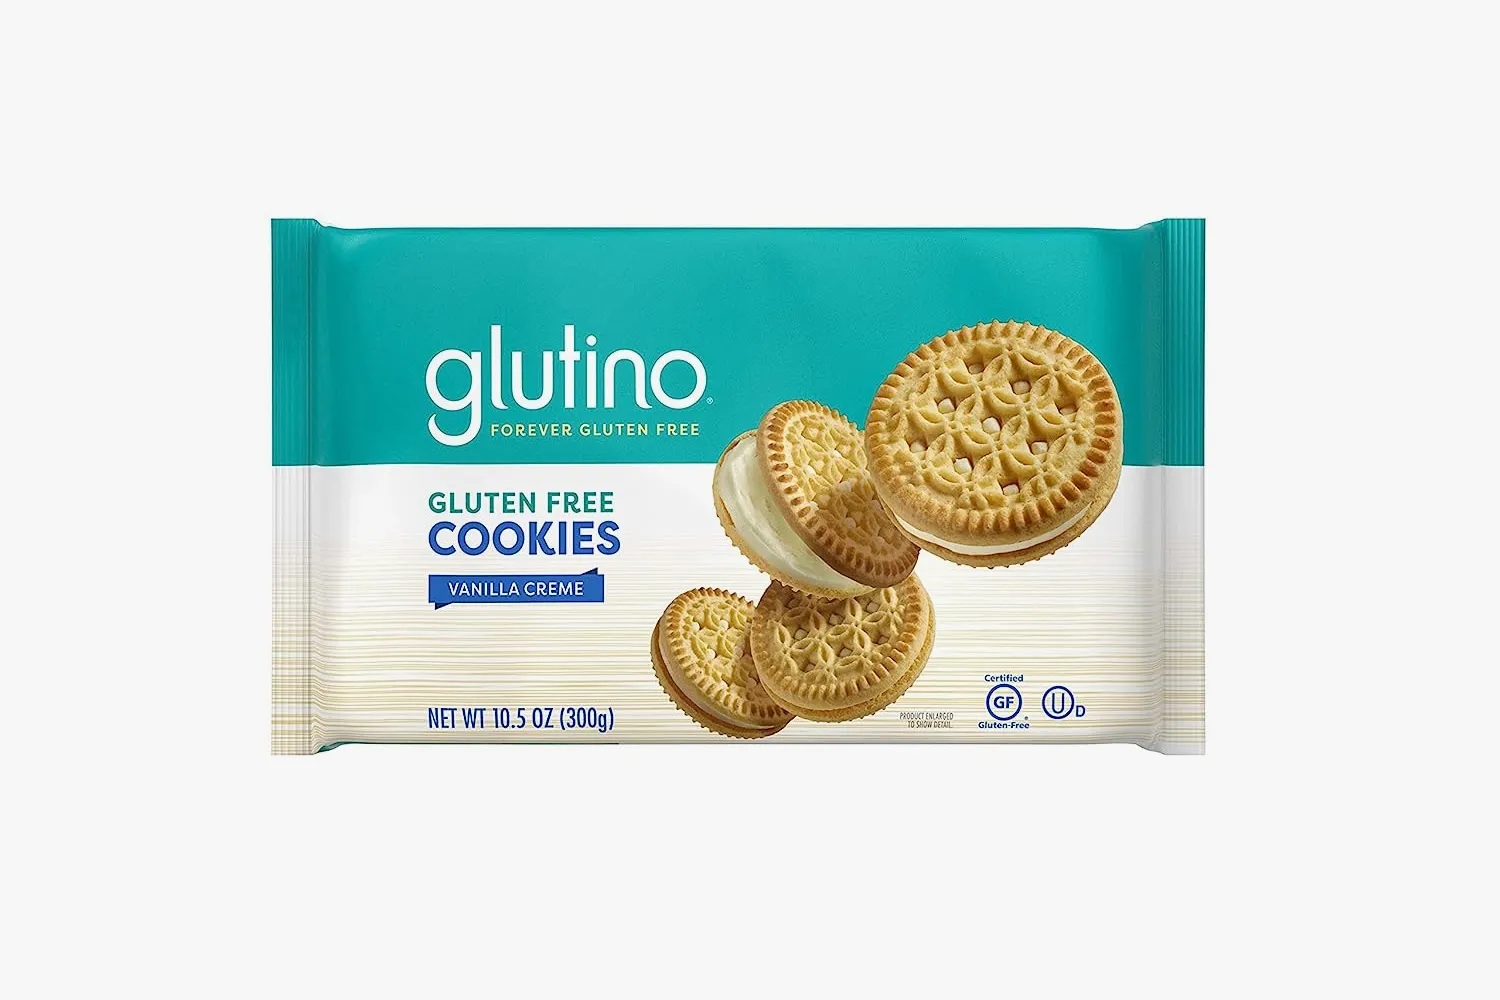 Glutino Gluten-Free Cookies